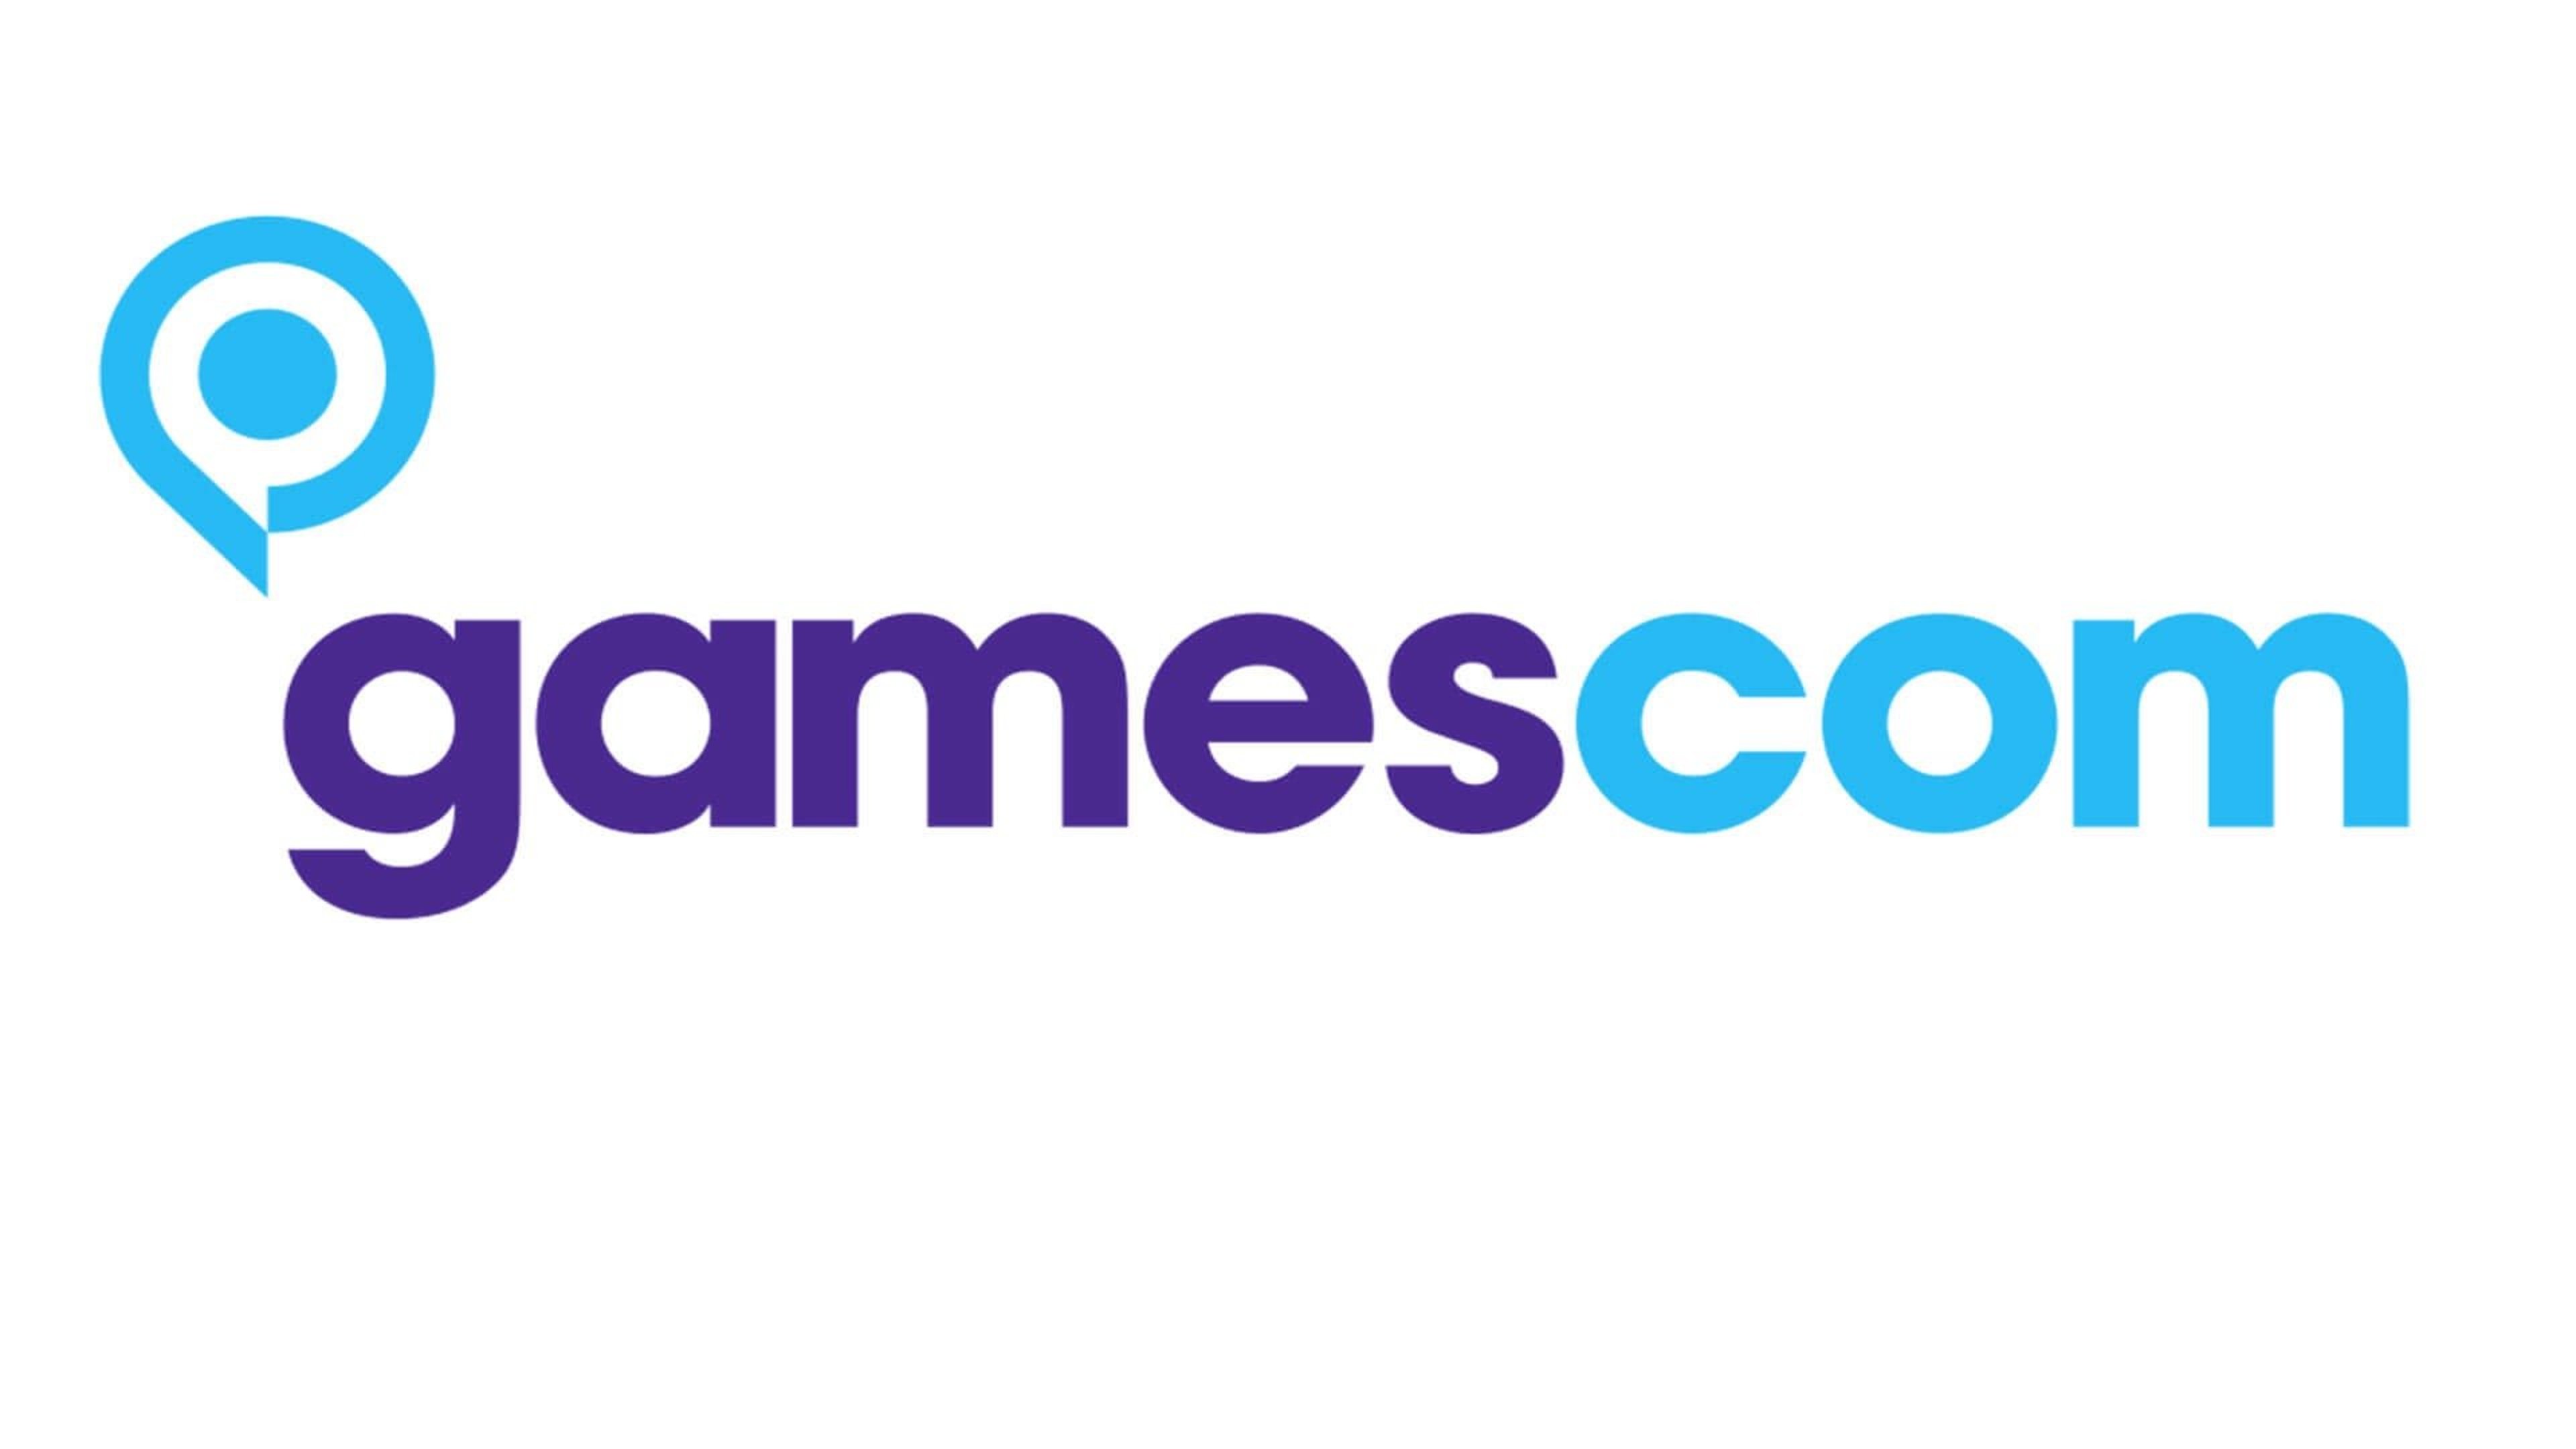 L’Olanda è stata scelta come paese partner di gamescom 2019 Copertina